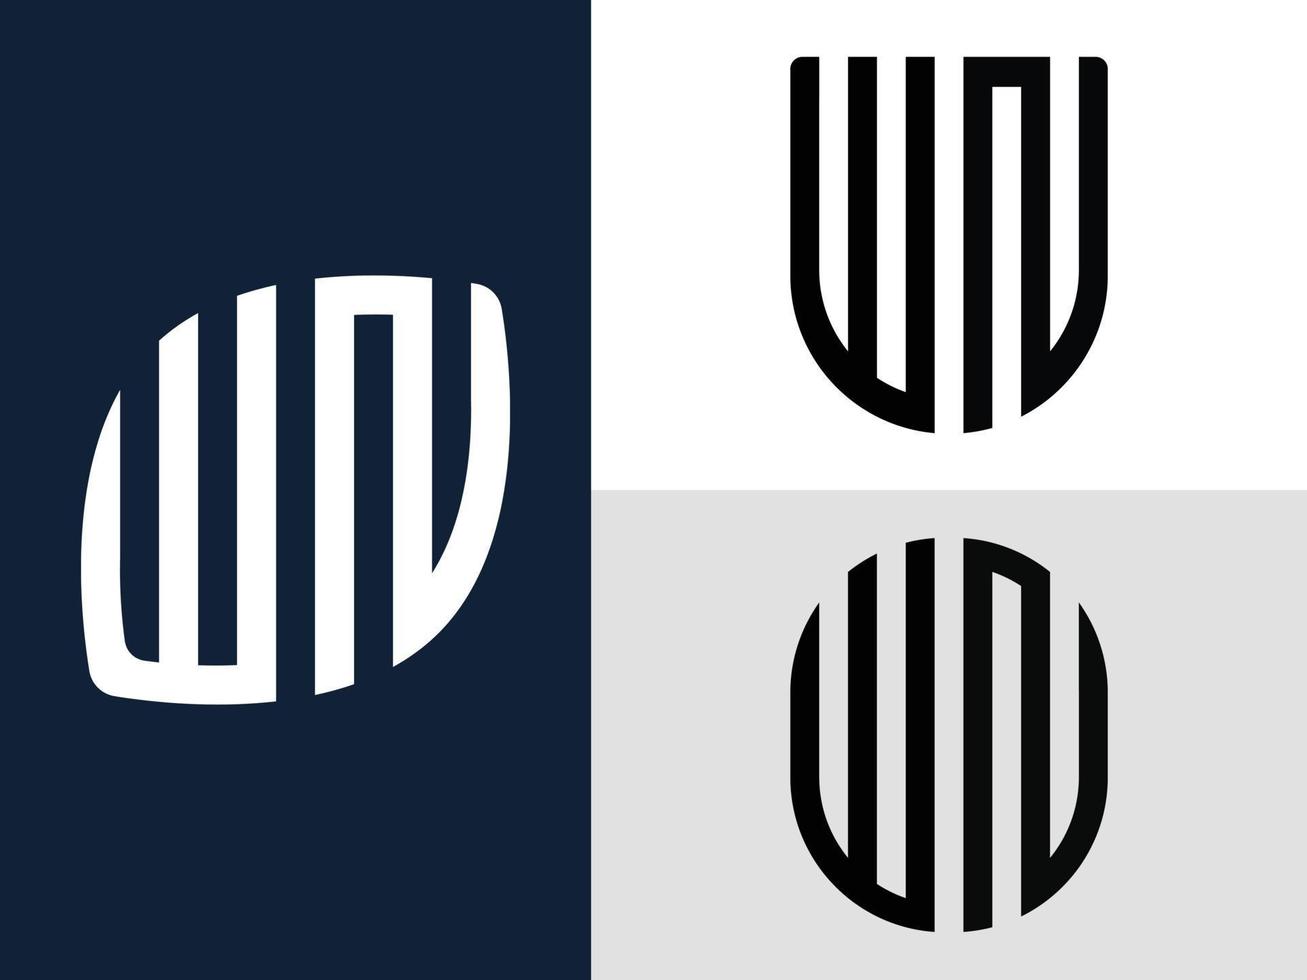 kreative anfangsbuchstaben wn logo designs paket. vektor